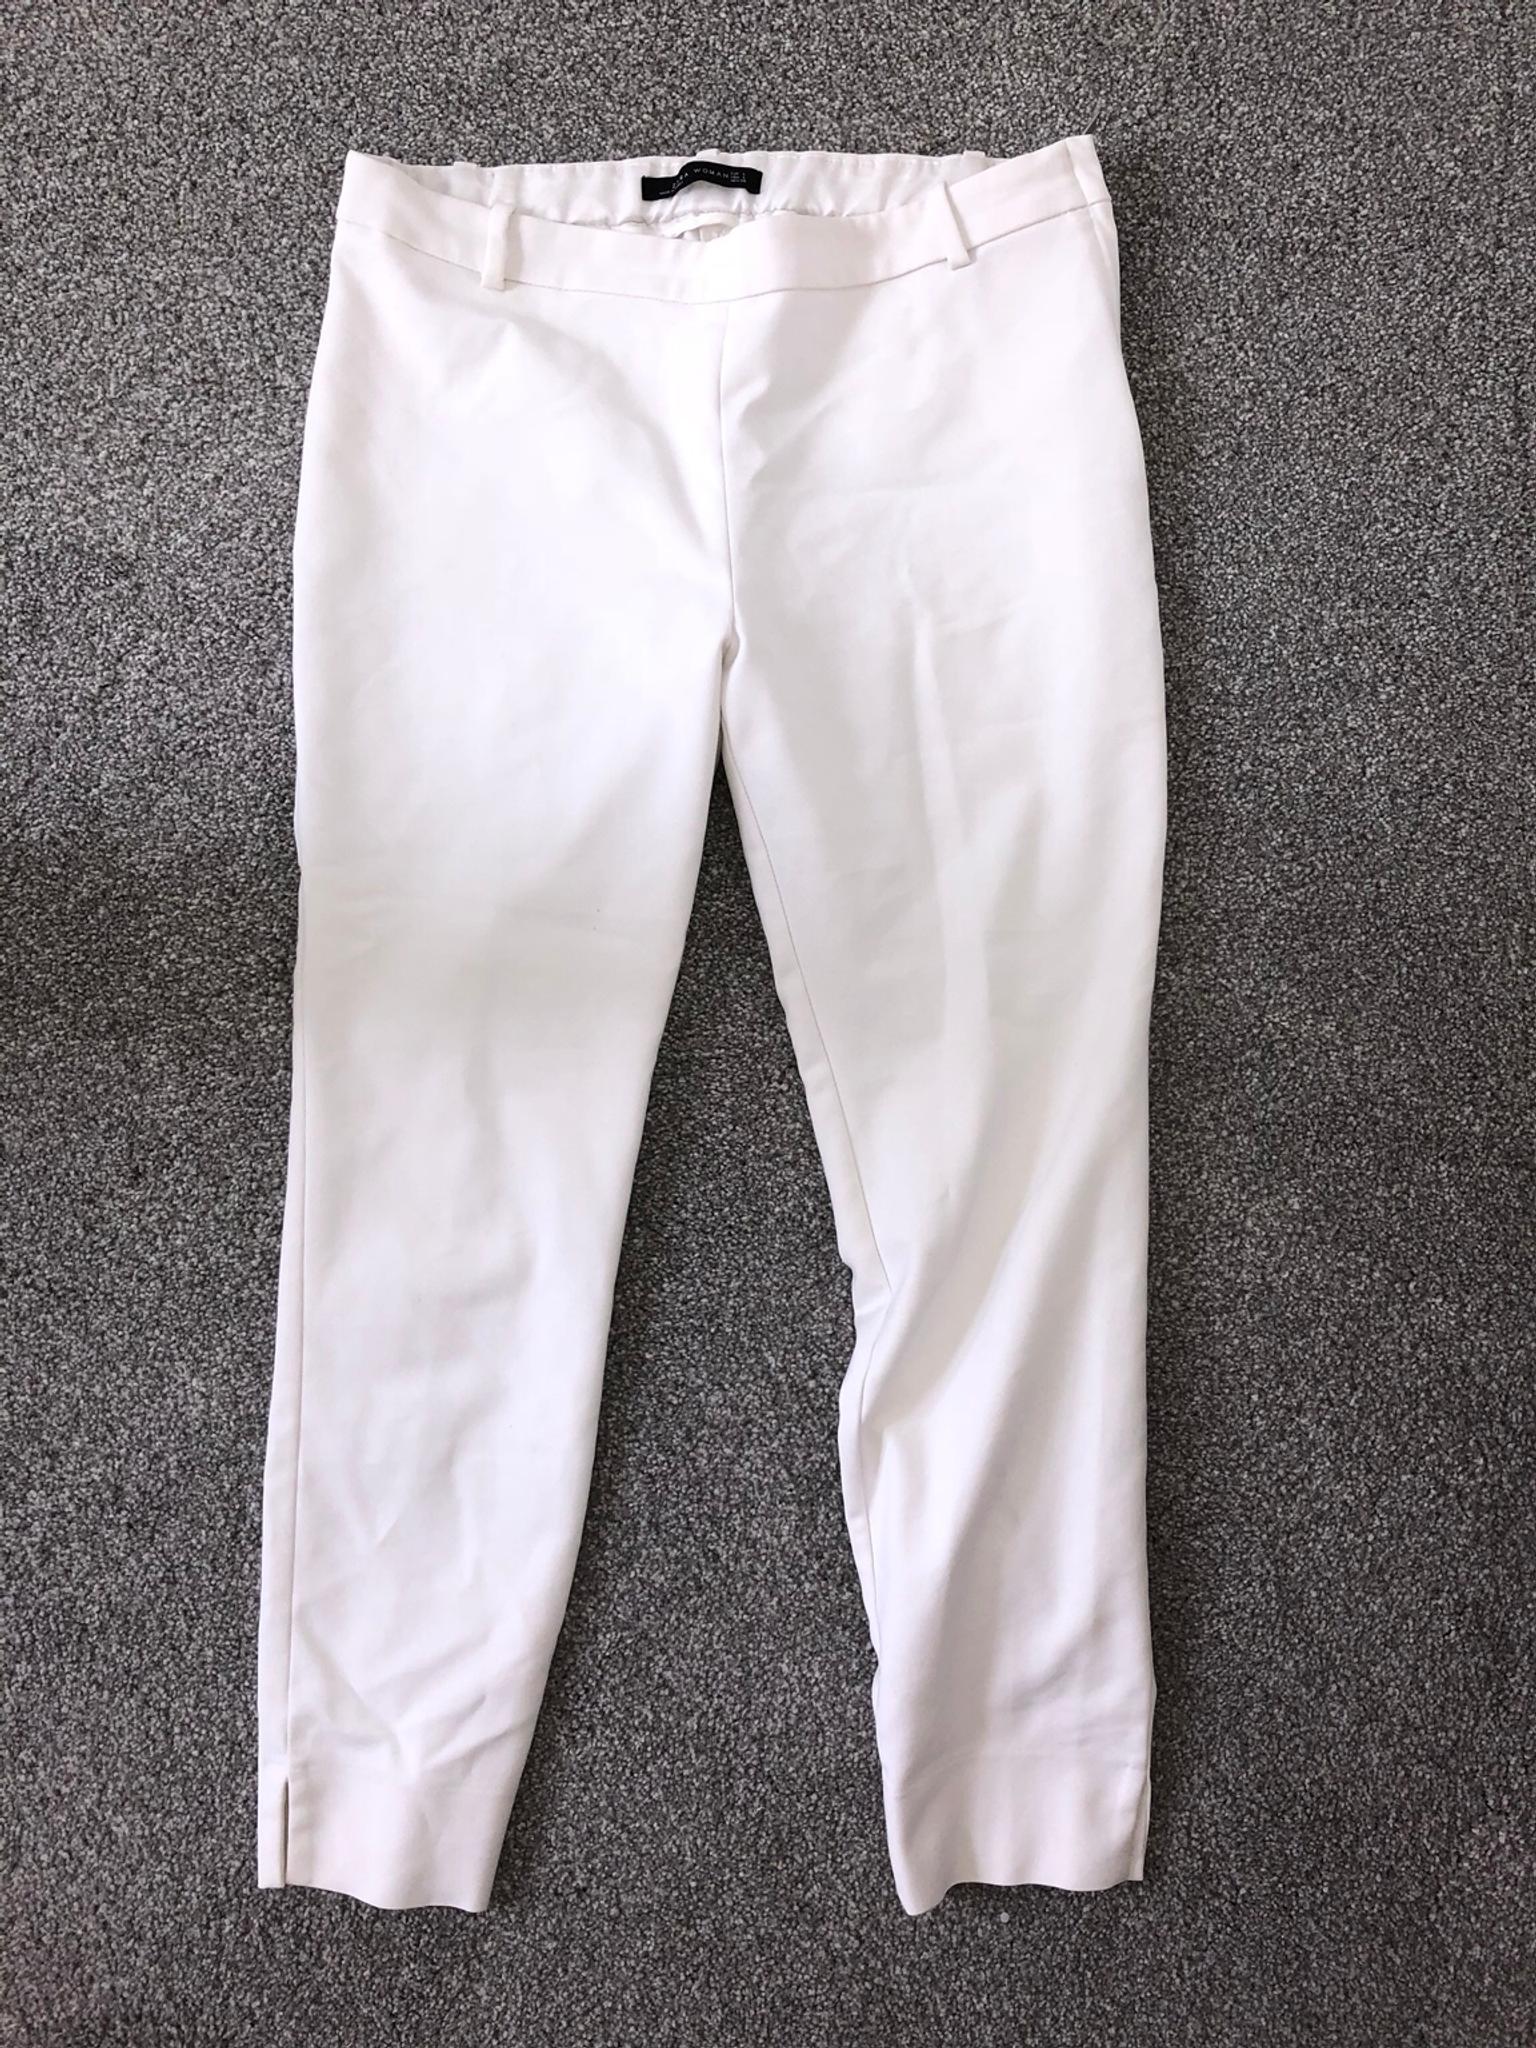 zara white trousers